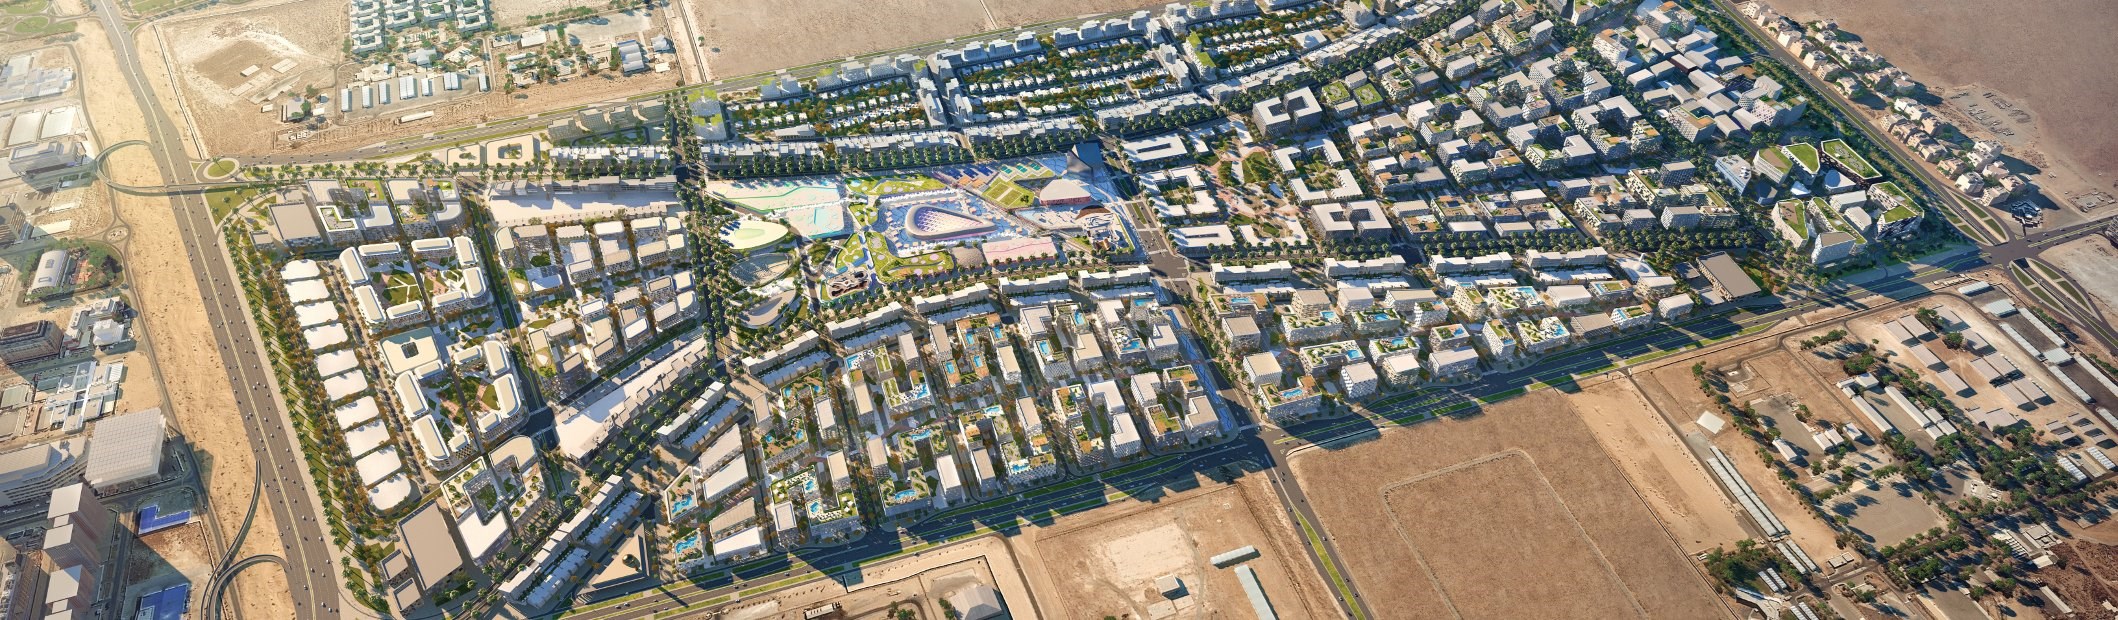 Gulf News: Sharjah’s Dh24b development sticks to tight construction plans